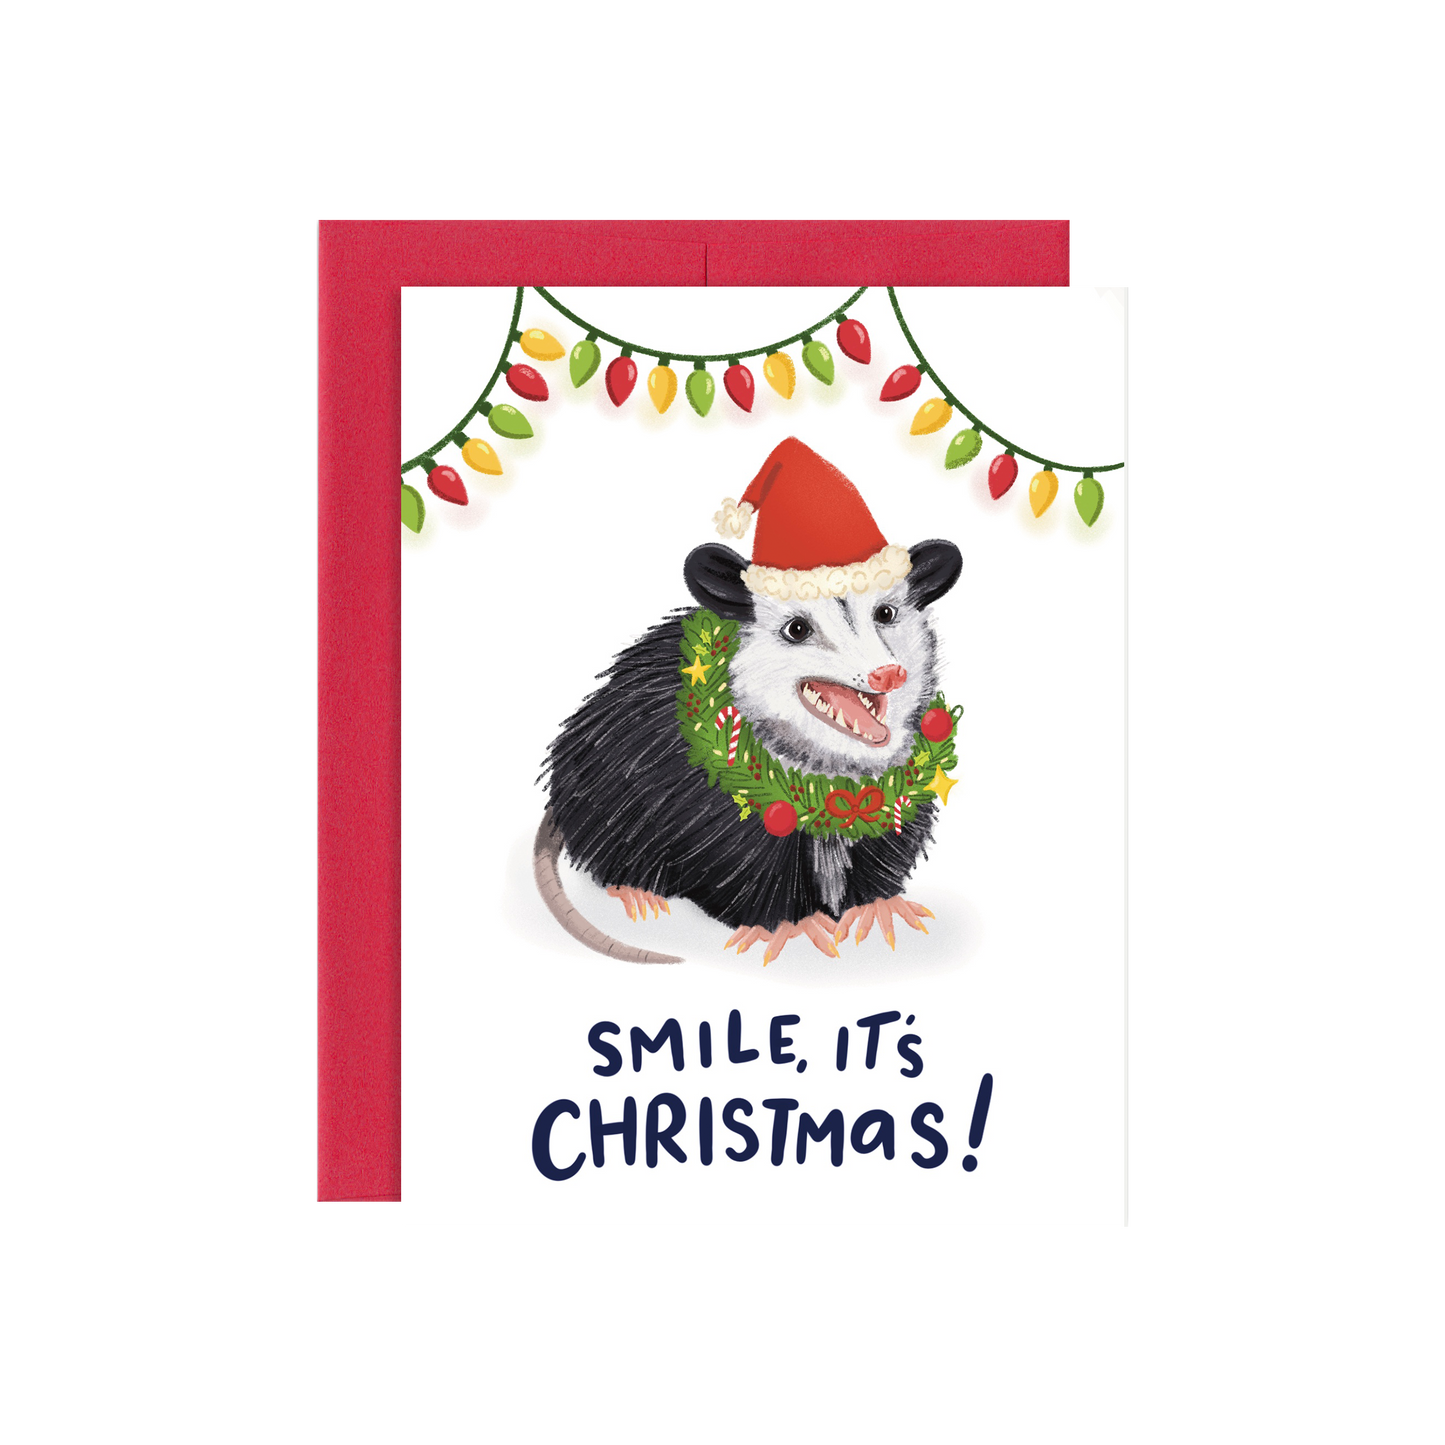 Opossum Holiday Ornament Set